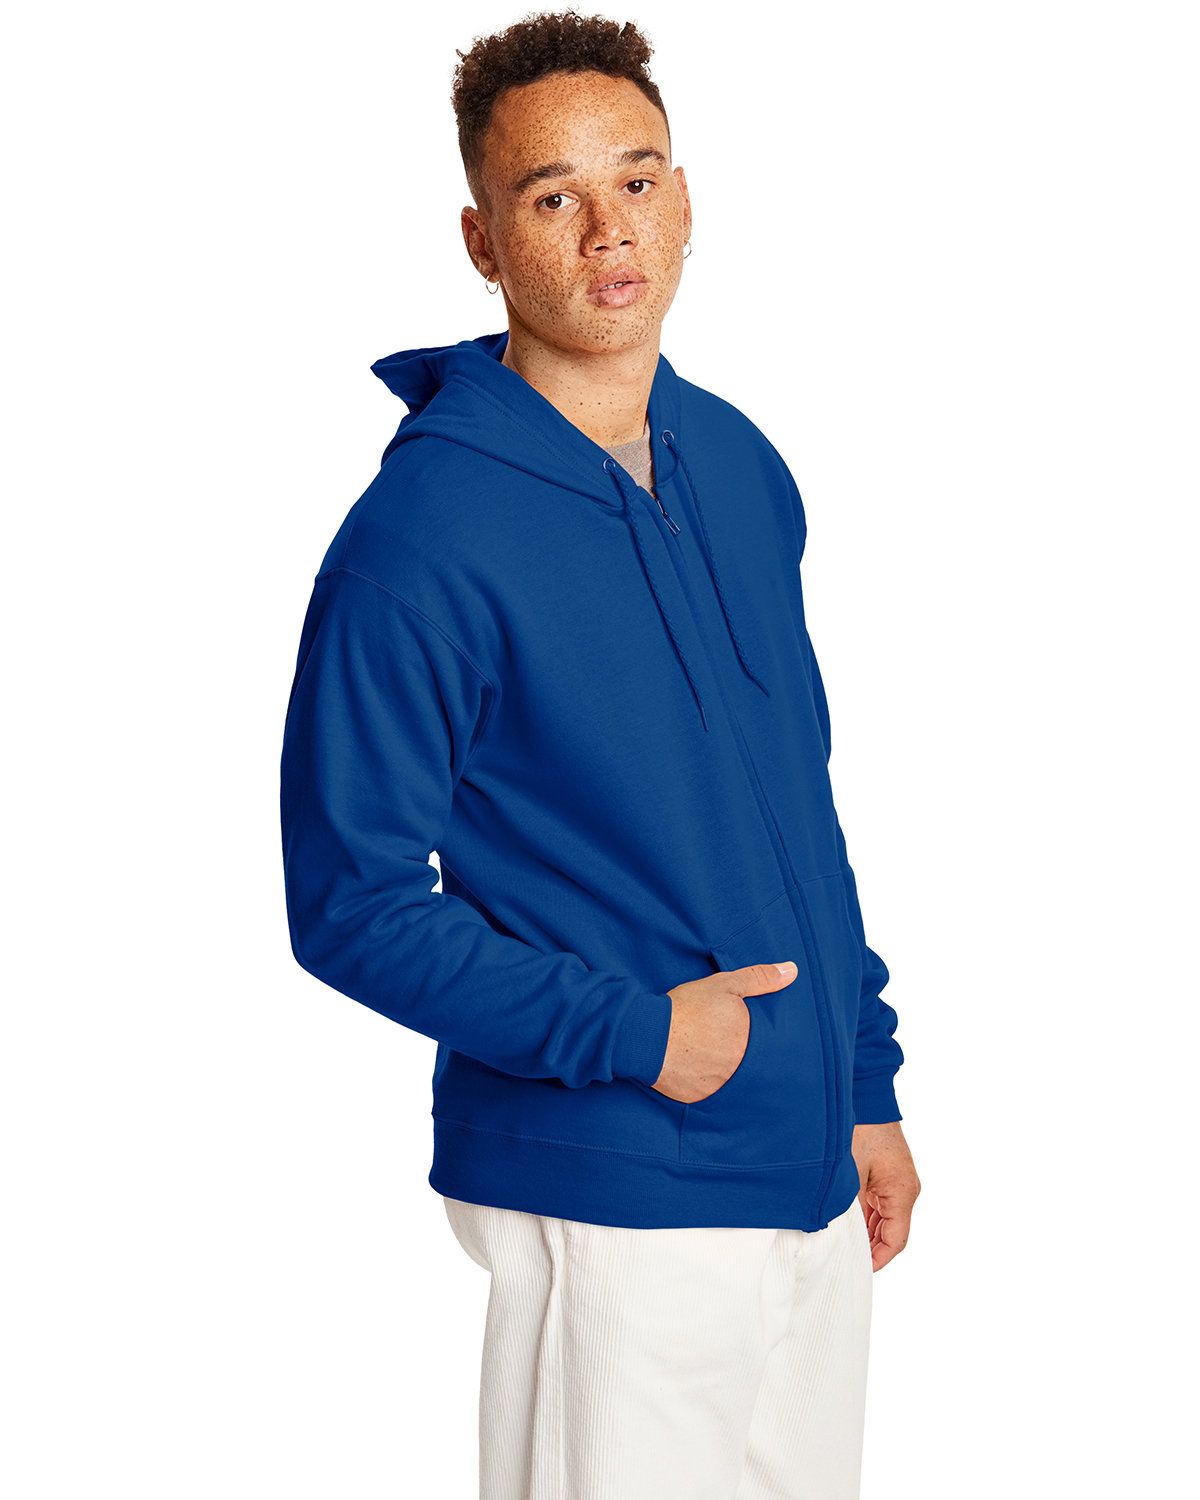 Hanes P180 Full-Zip Sweatshirt with Custom Embroidery